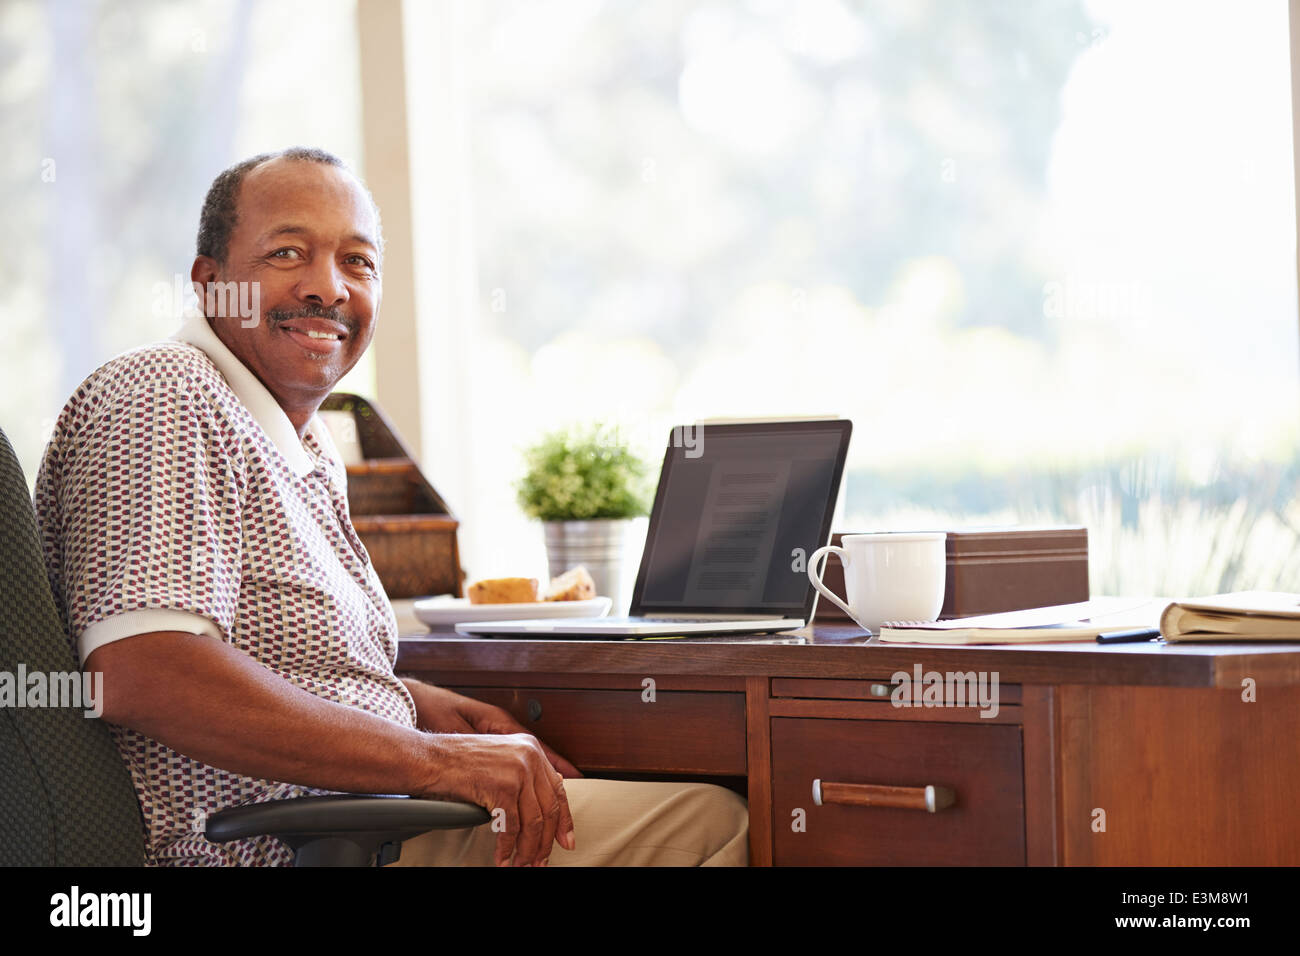 Senior Man Using Laptop On Desk At Home Stock Photo